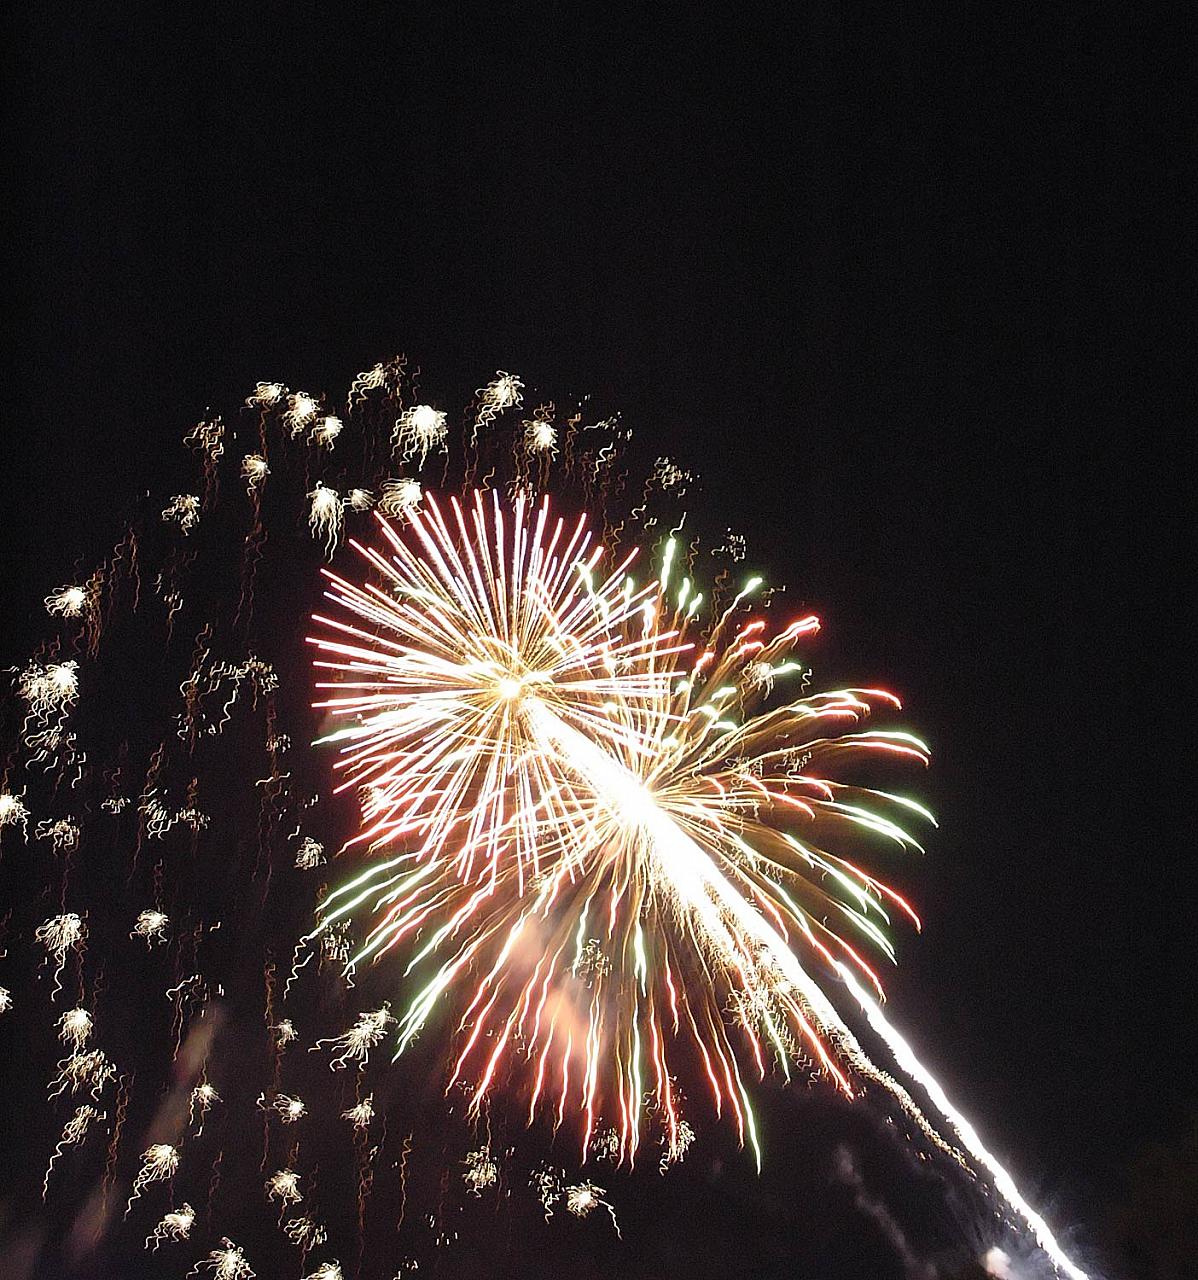 fireworks10.jpg